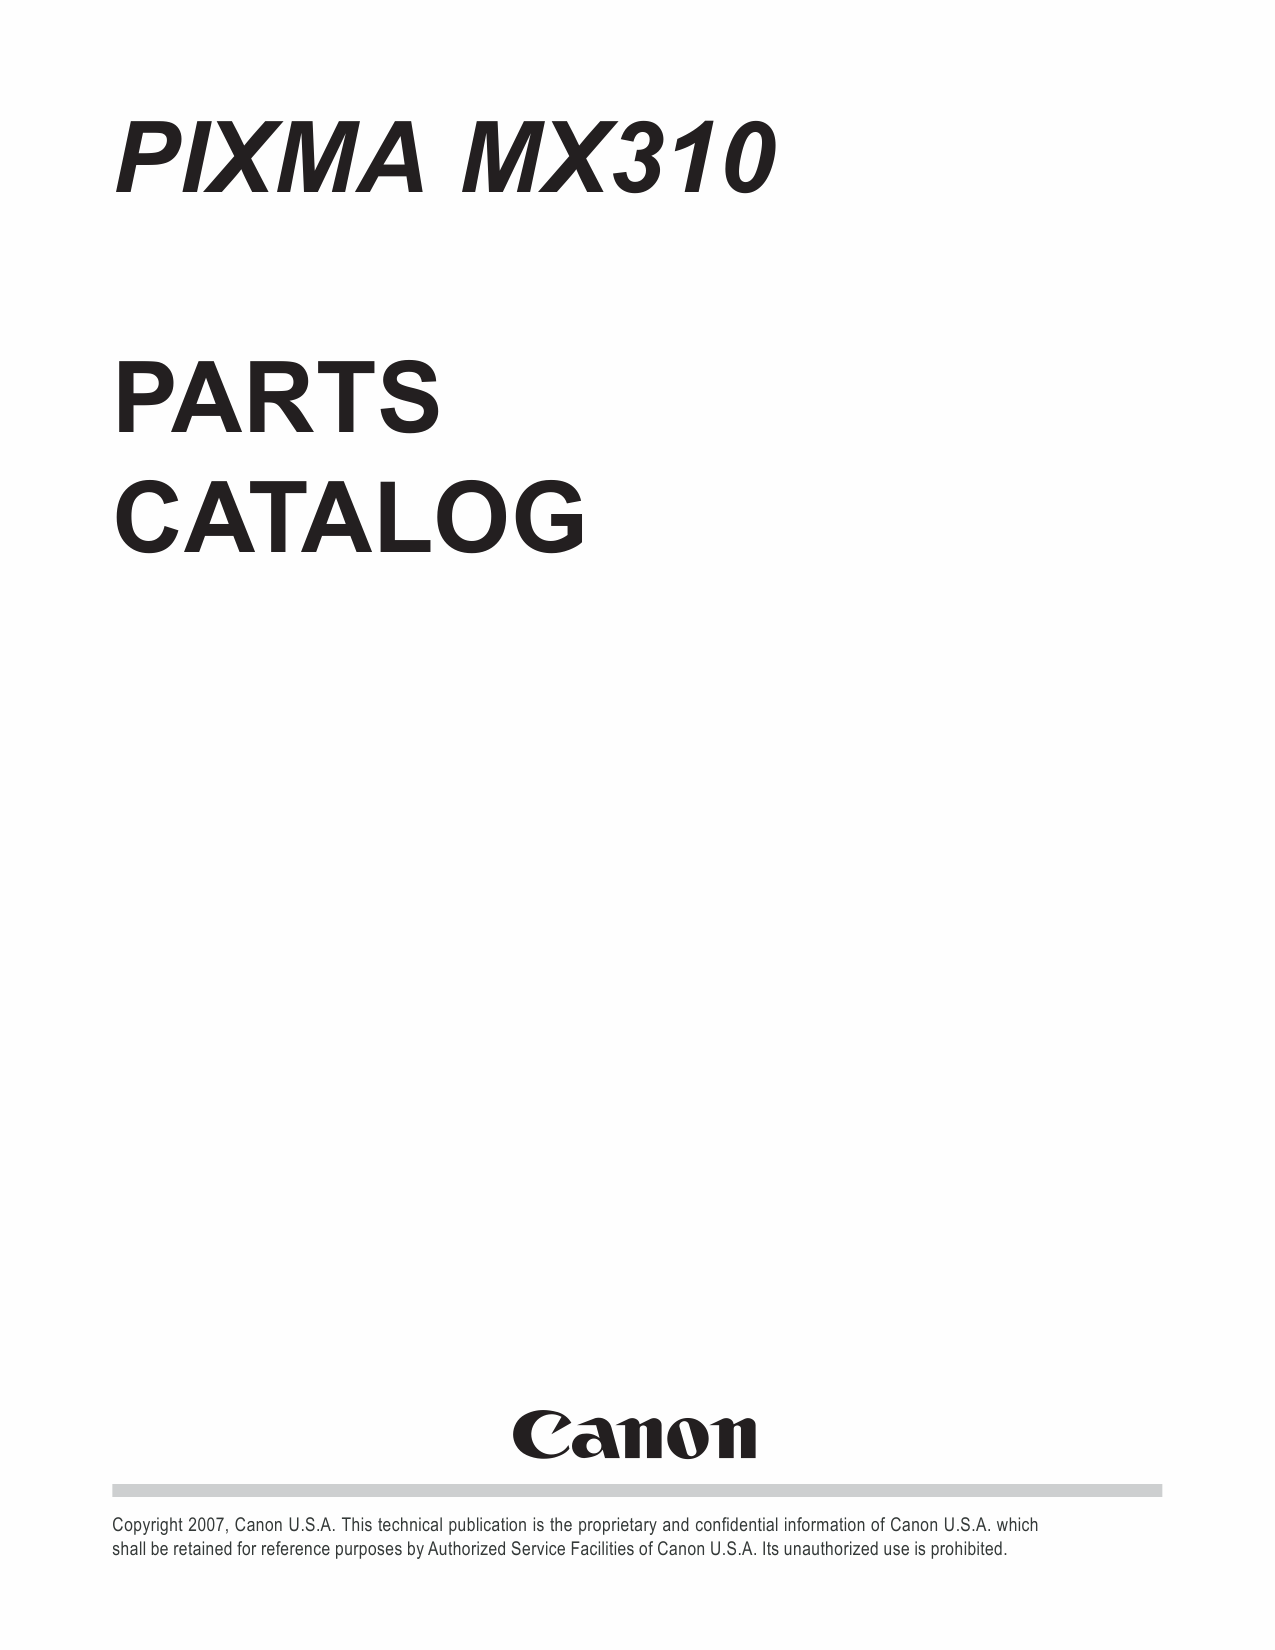 Canon PIXMA MX310 Parts Catalog-1